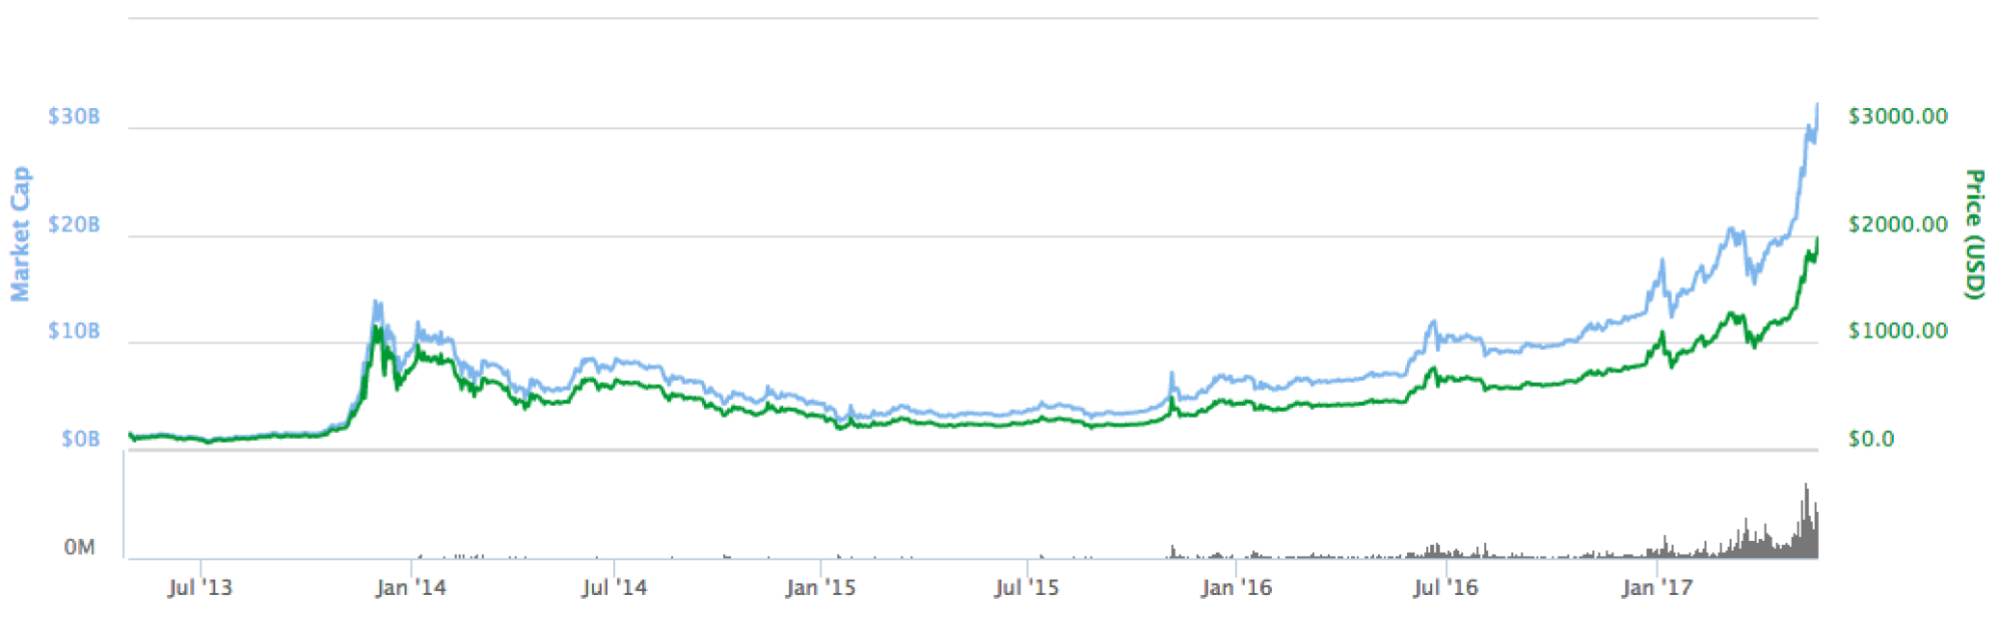 BZX ($) - Bitcoin Zero Price Chart, Value, News, Market Cap | CoinFi